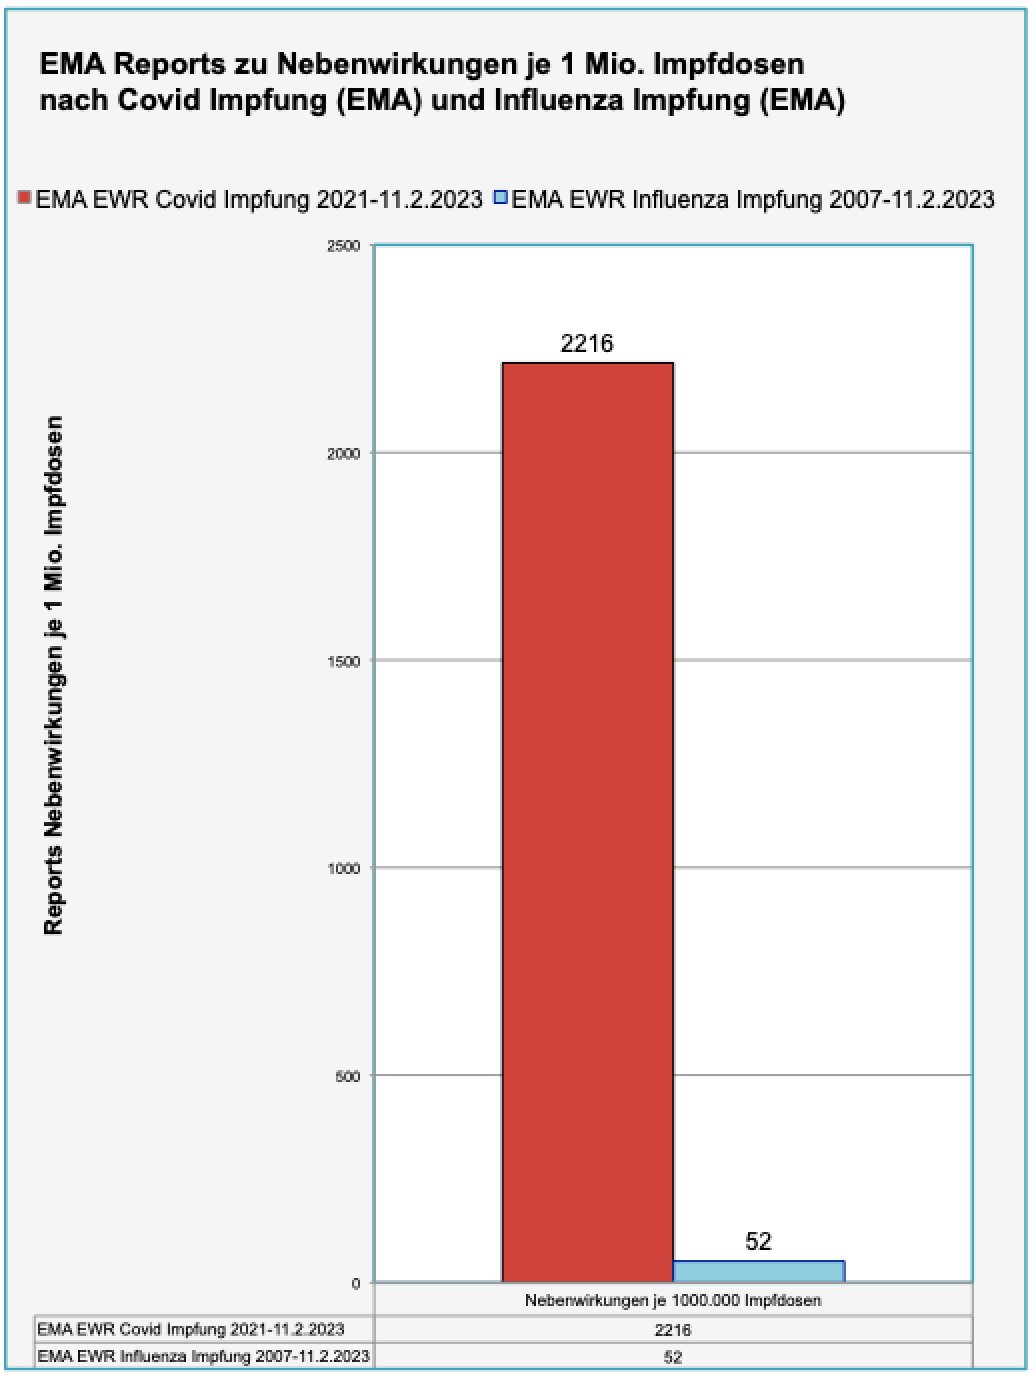 Covid Impfstoffe EMA EWR 2021-2023 vs. Influenza Impfstoffe EMA EWR 2007-2023 Verdachtsfälle Nebenwirkungen je 1.000.000 Impfdosen